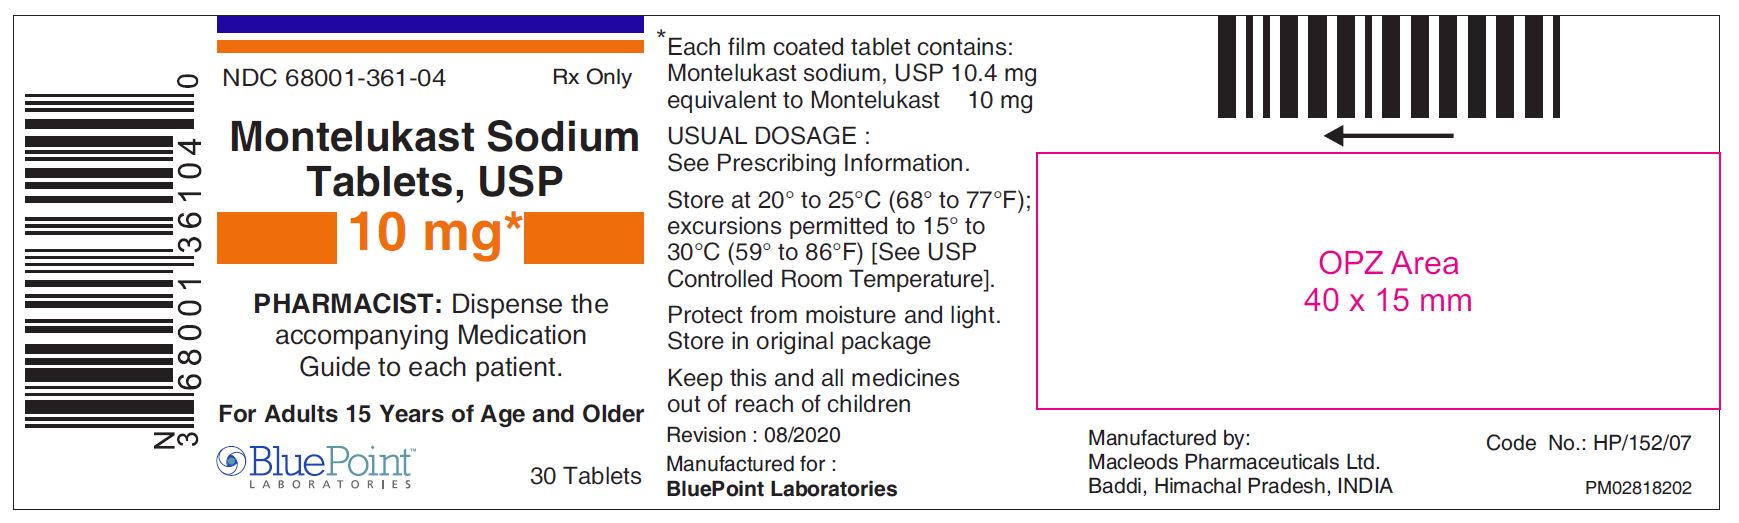 Montelukast Sodium Tablets, USP 100 mg 30 ct